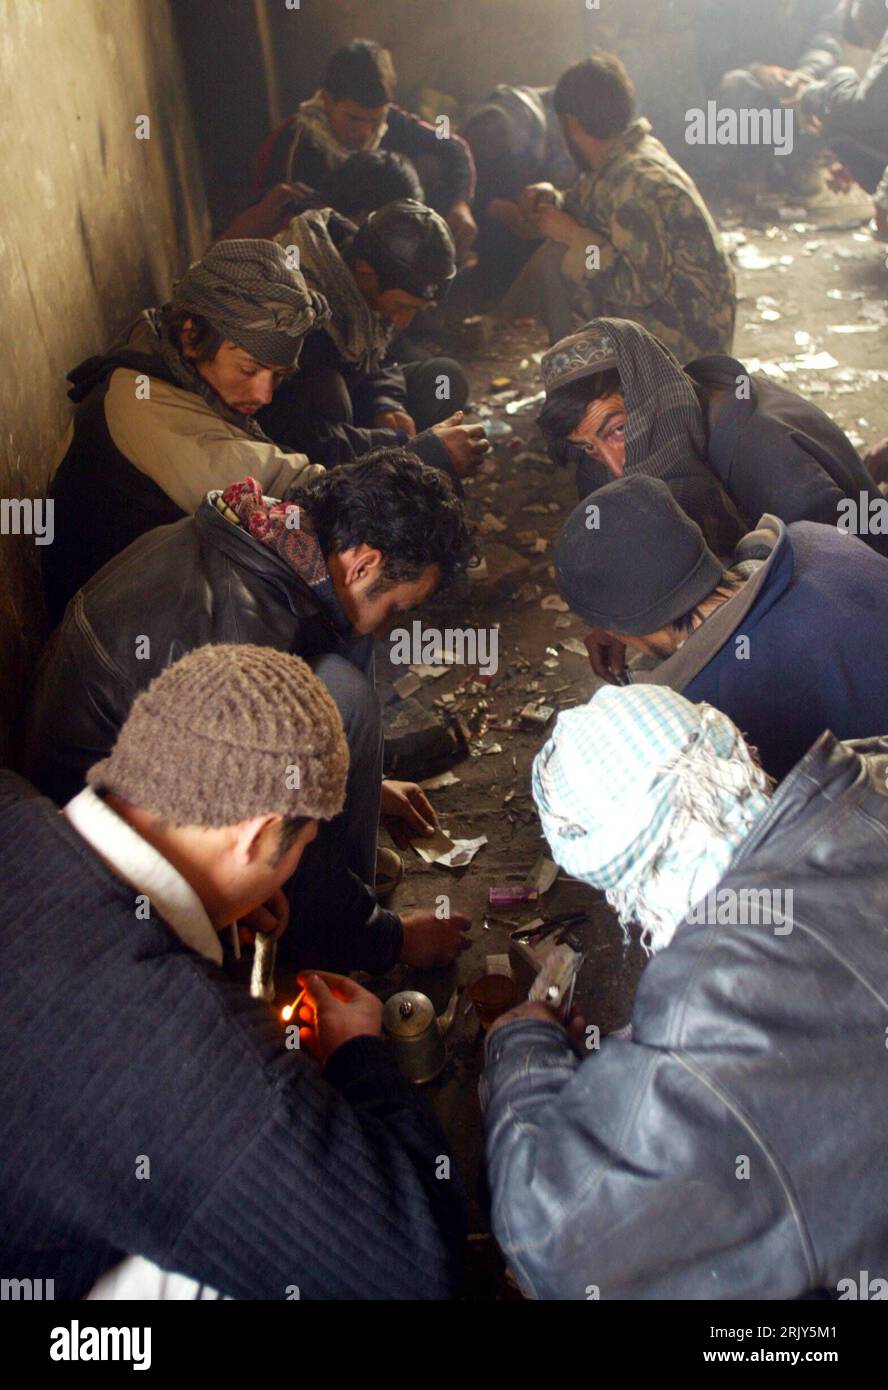 Bildnummer: 52452481  Datum: 10.03.2008  Copyright: imago/Xinhua Drogensüchtige spritzen sich Heroin in einem verlassenen Gebäude in Kabul - PUBLICATIONxNOTxINxCHN, Personen; 2008, Kabul, Afghanistan , Drogenabhängige, Drogenabhängigkeit, Drogenabhängiger, Schuss, setzen, heroinsüchtig, Suchtverhalten, Heroinsucht, abhängig, Abhängigkeit, Junkie, Fixer, Armut, Mann; , hoch, Kbdig, Totale, Drogen, Gesellschaft,  , Gesellschaft, Asien Stock Photo